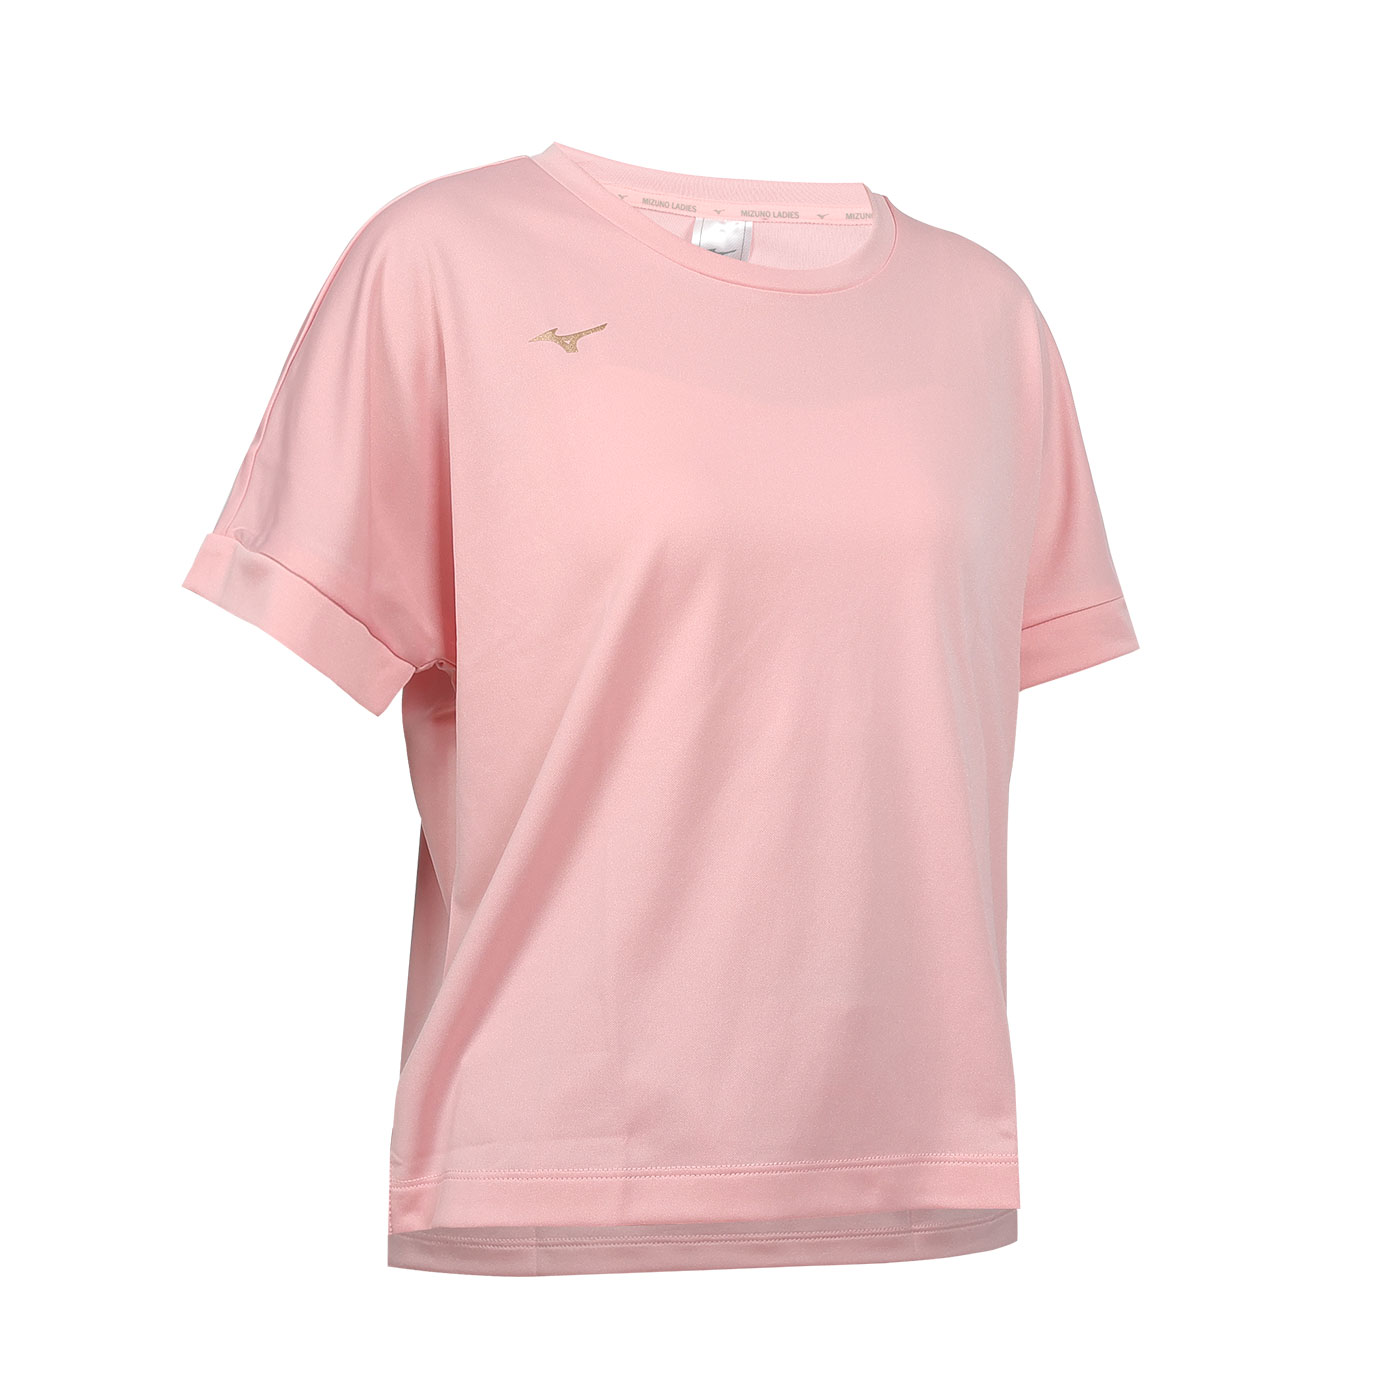 MIZUNO 女款短袖T恤  32TAB20266 - 粉玫瑰金綠